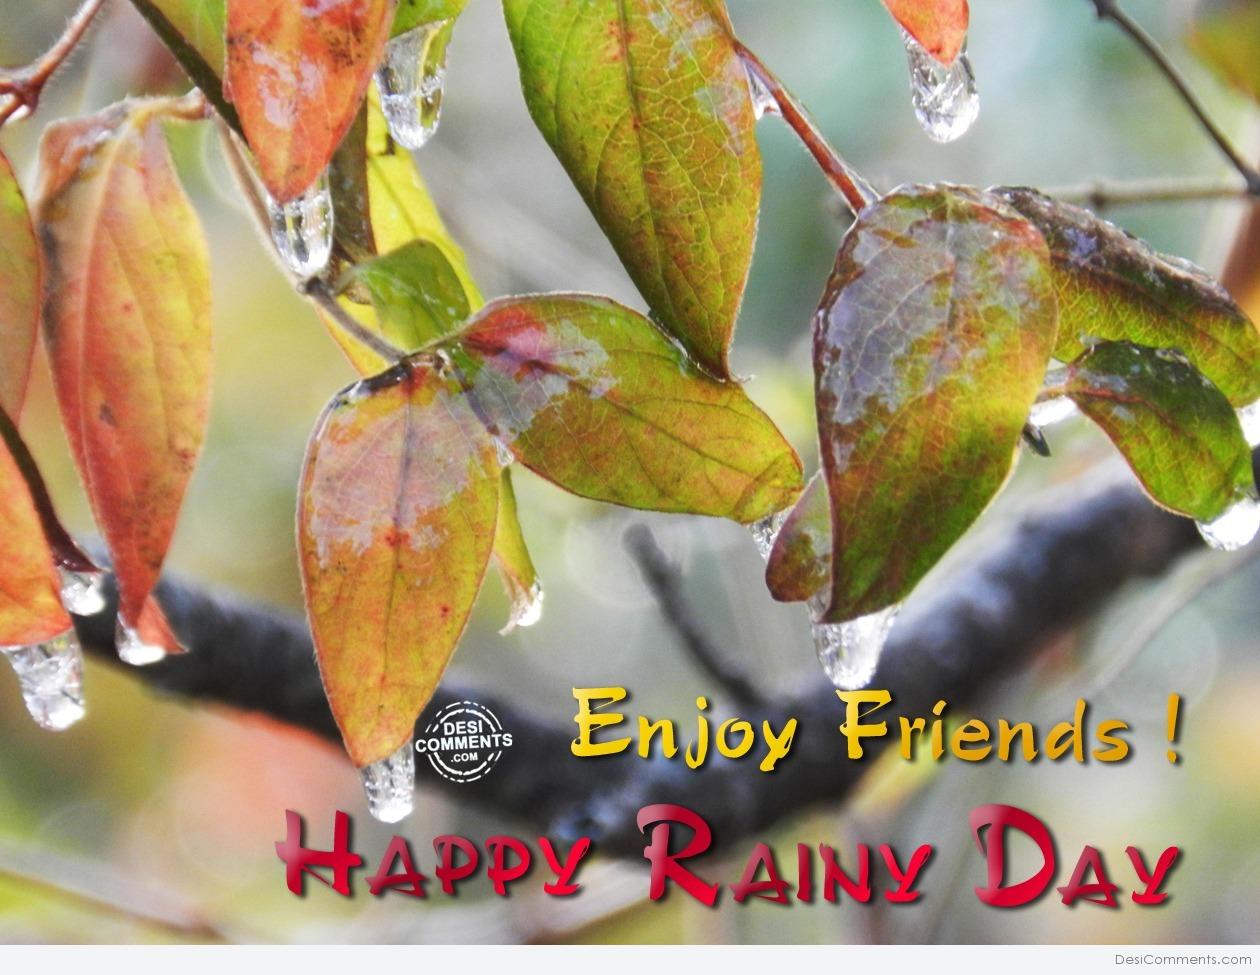 Happy Rainy Day - DesiComments.com